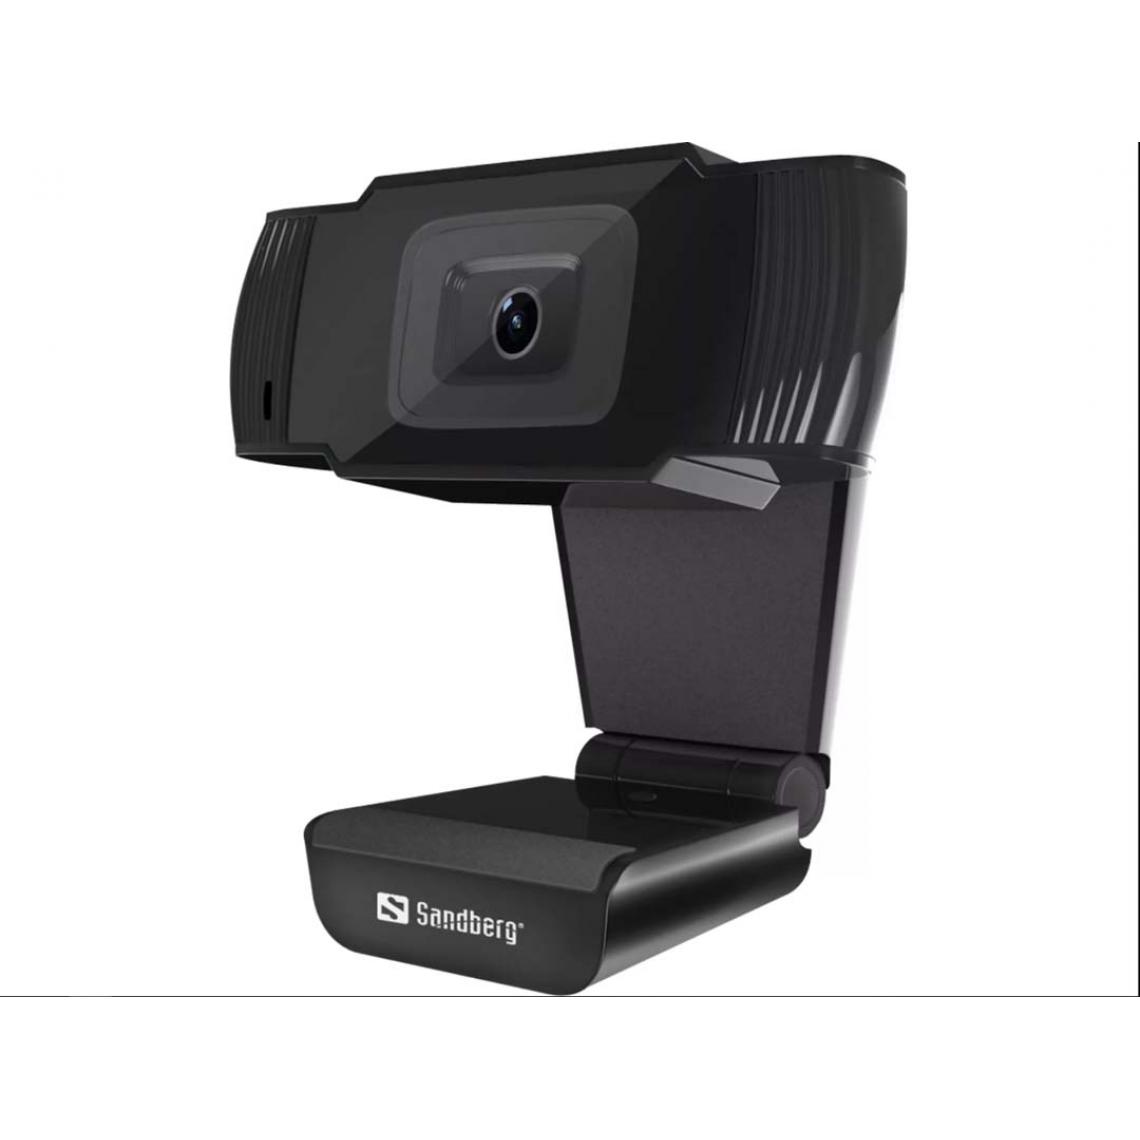 Sandberg - Sanberg USB Webcam 480P Saver - Webcam